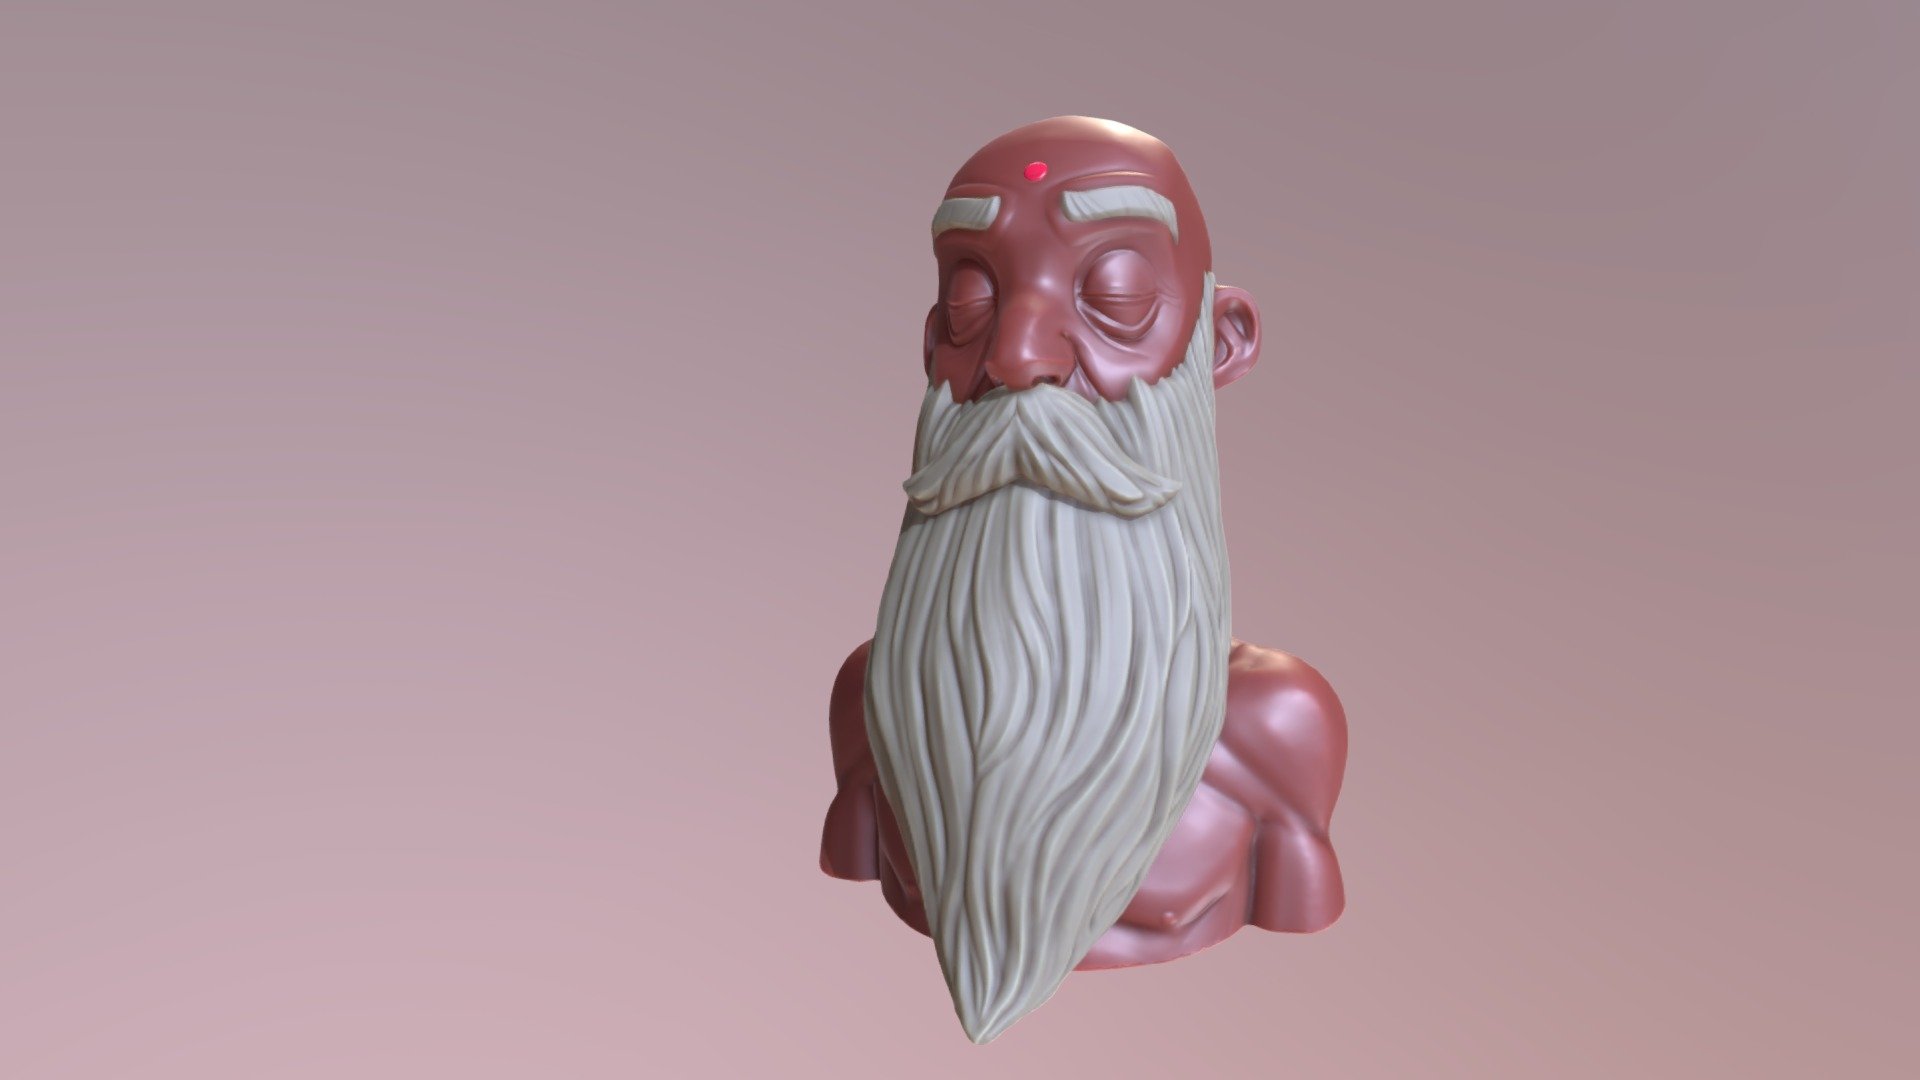 SculptJanuary 2019 day 10 - Beard.

All made in Blender 2.8 sculpt mode 3d model